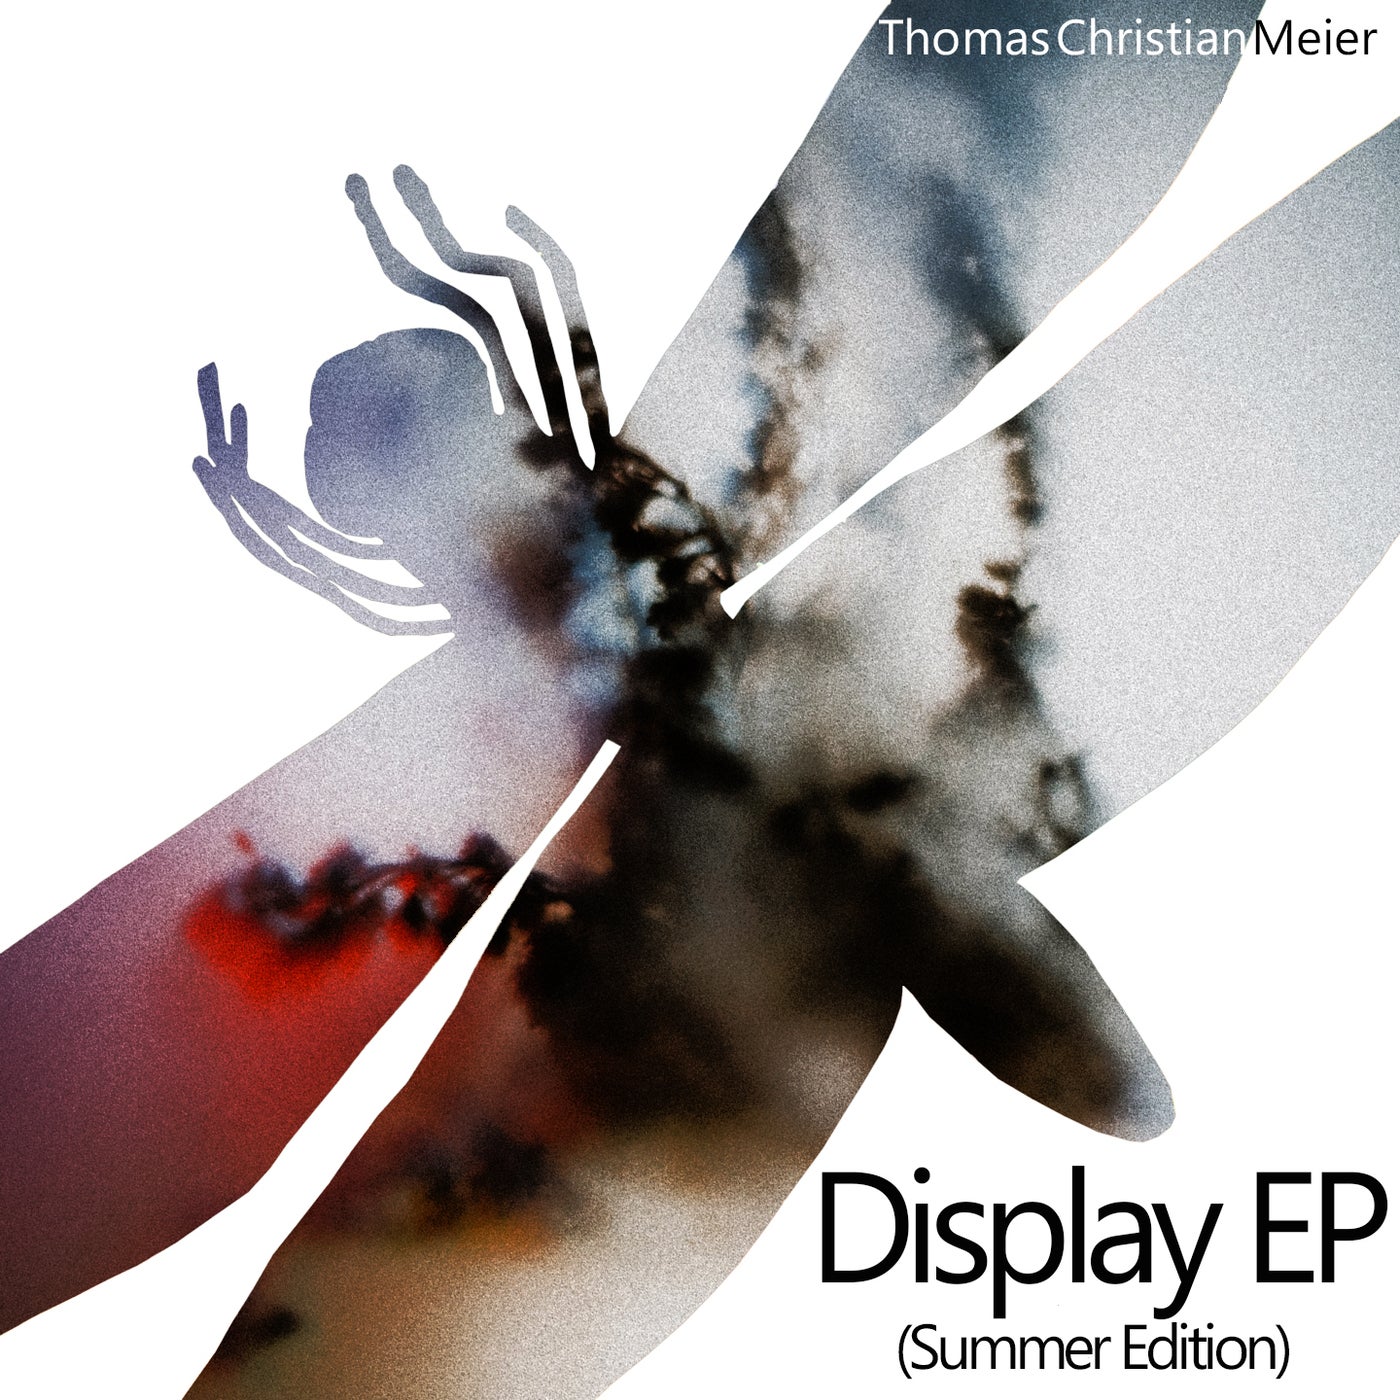 Display - EP (Summer Edition)